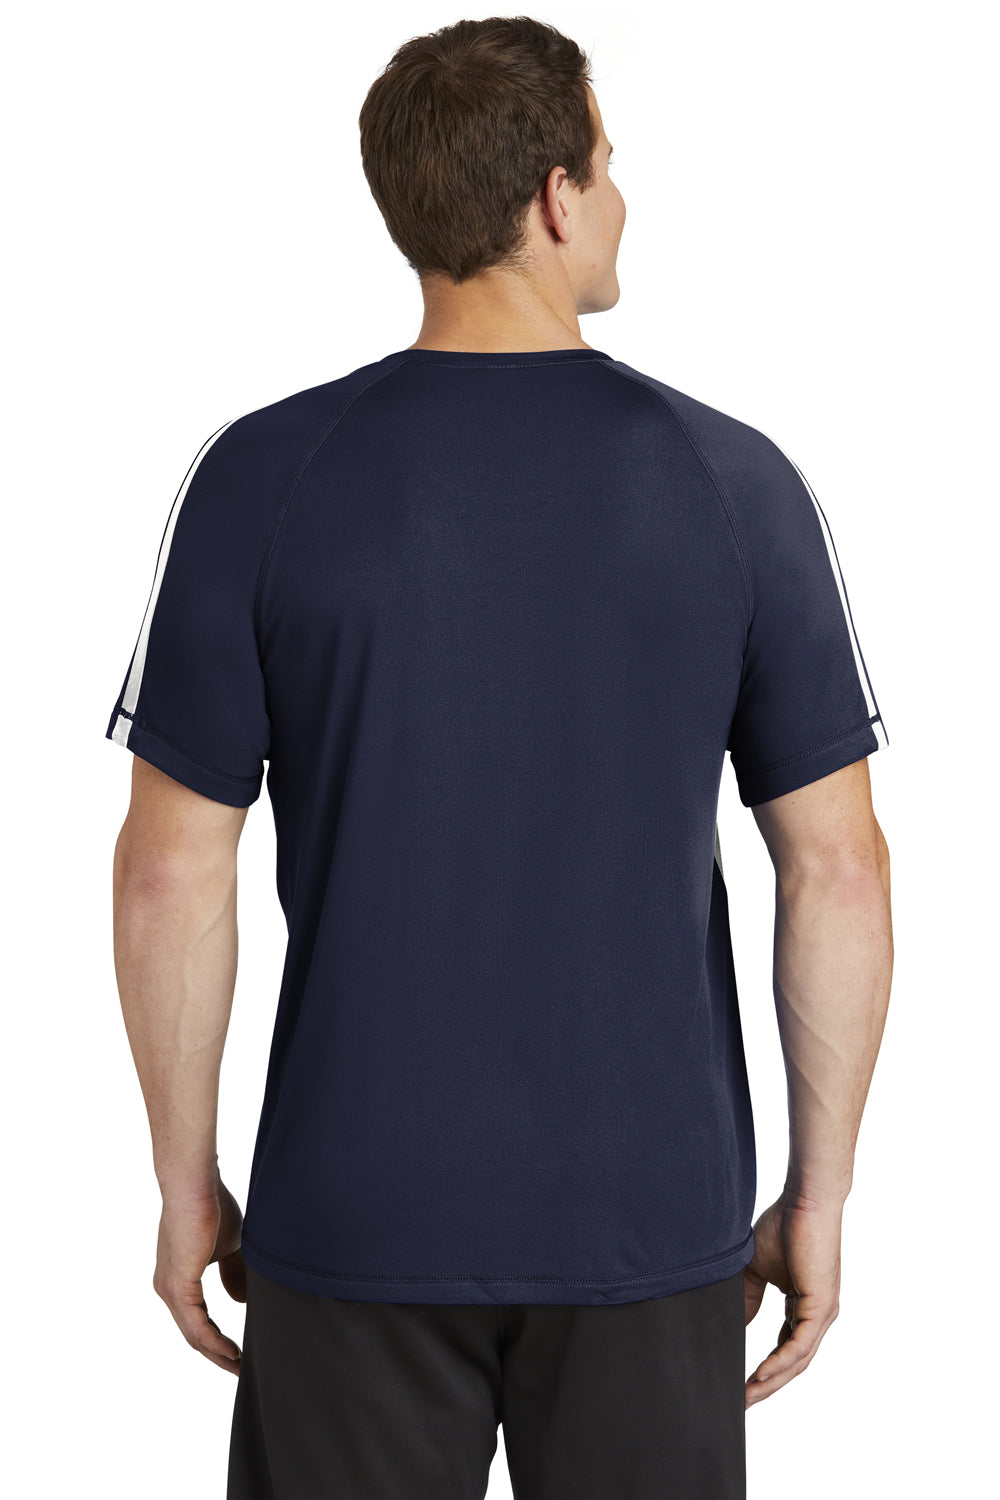 Sport-Tek ST351 Mens Competitor Moisture Wicking Short Sleeve Crewneck T-Shirt Navy Blue/White Back